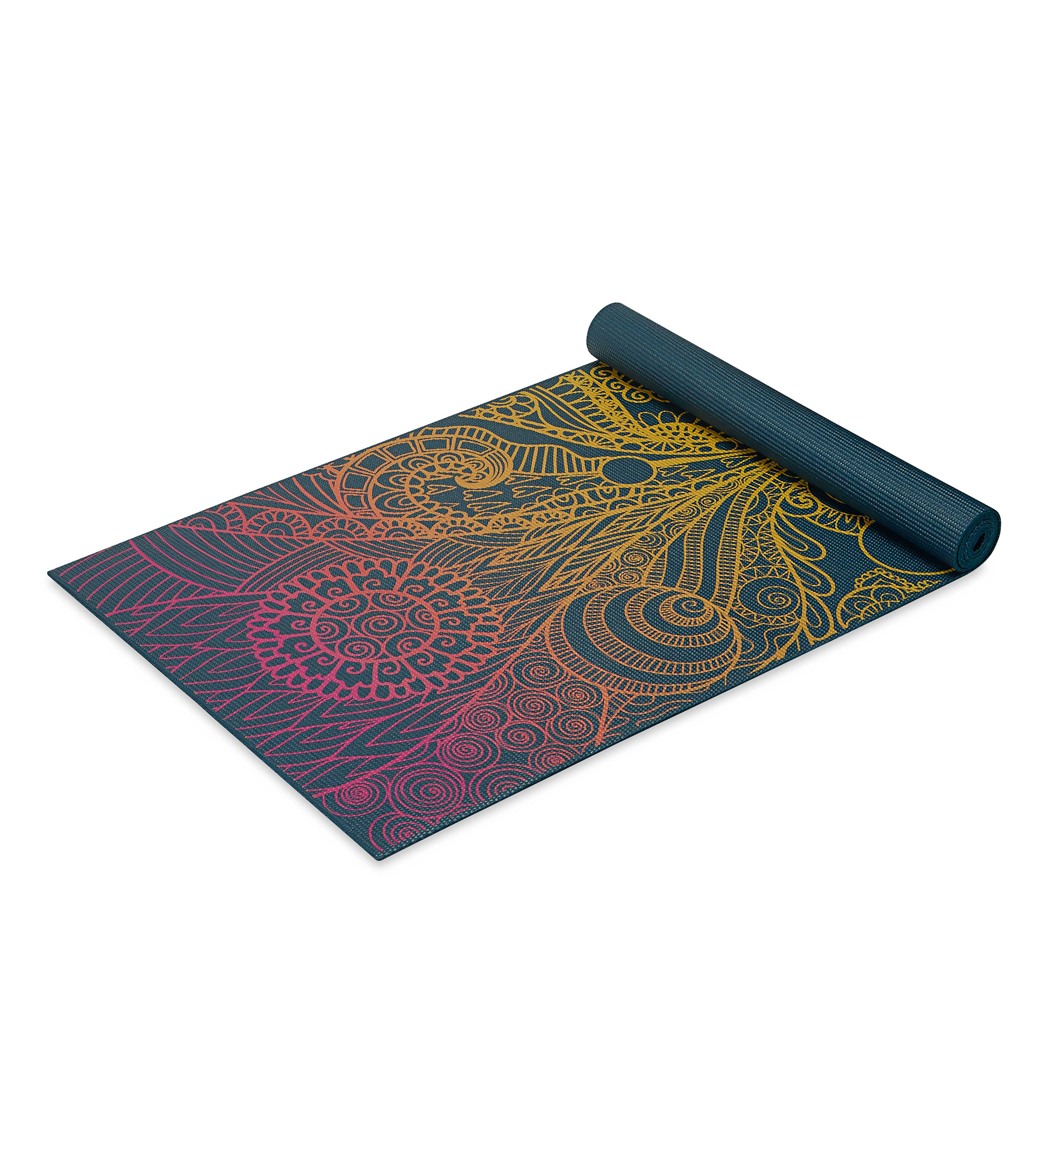 Gaiam Studio Select Dry-Grip Yoga Mat, 5mm, PVC, Non-Slip